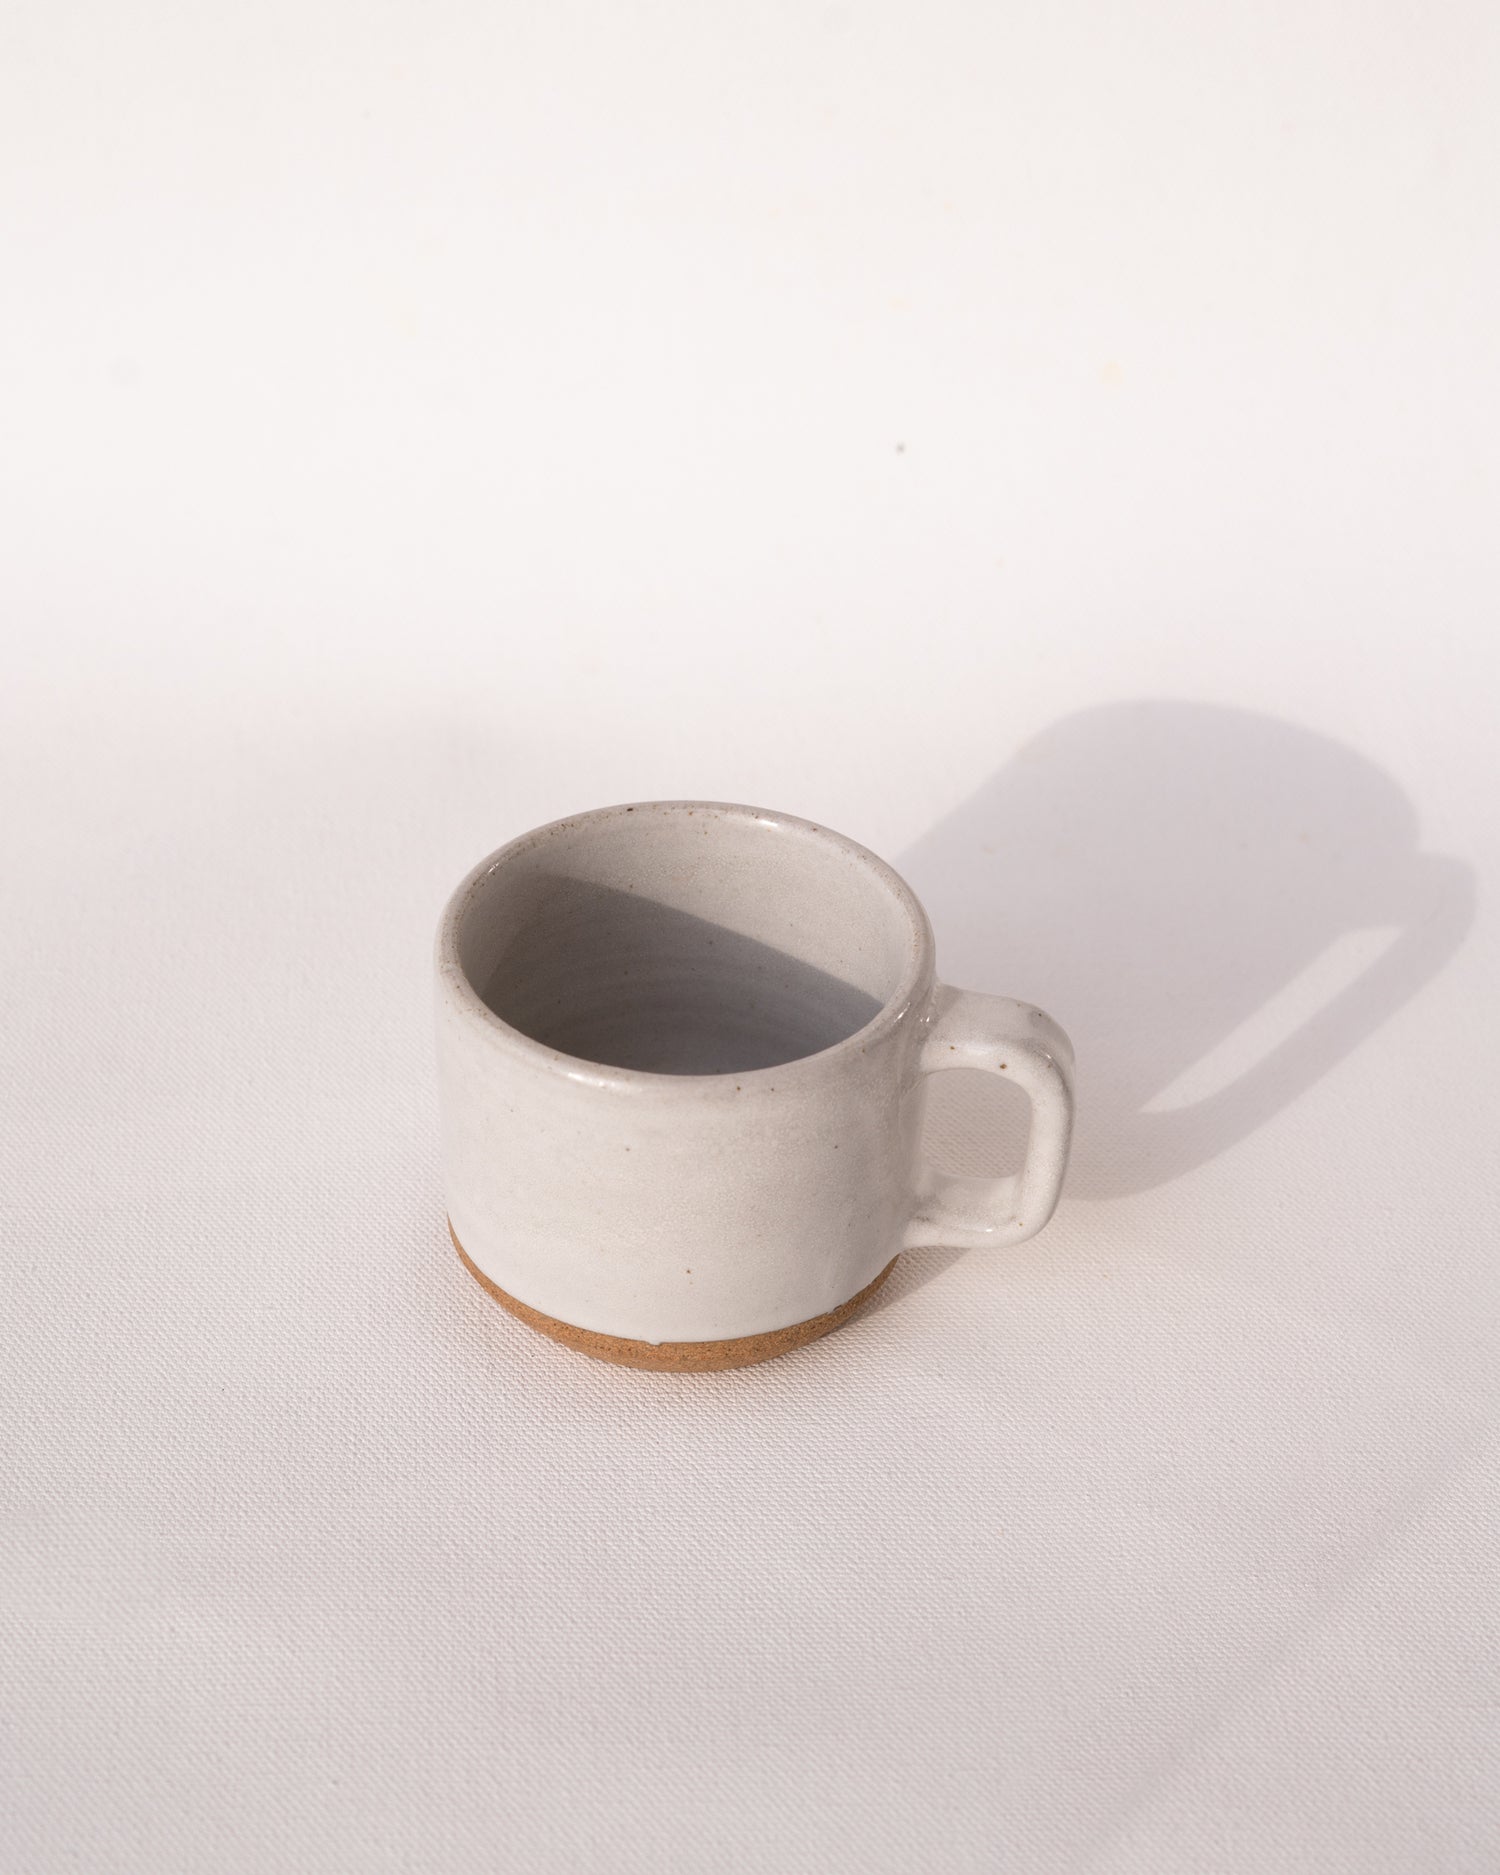 Snowdrop  Small White Ceramic Mugs For Coffee